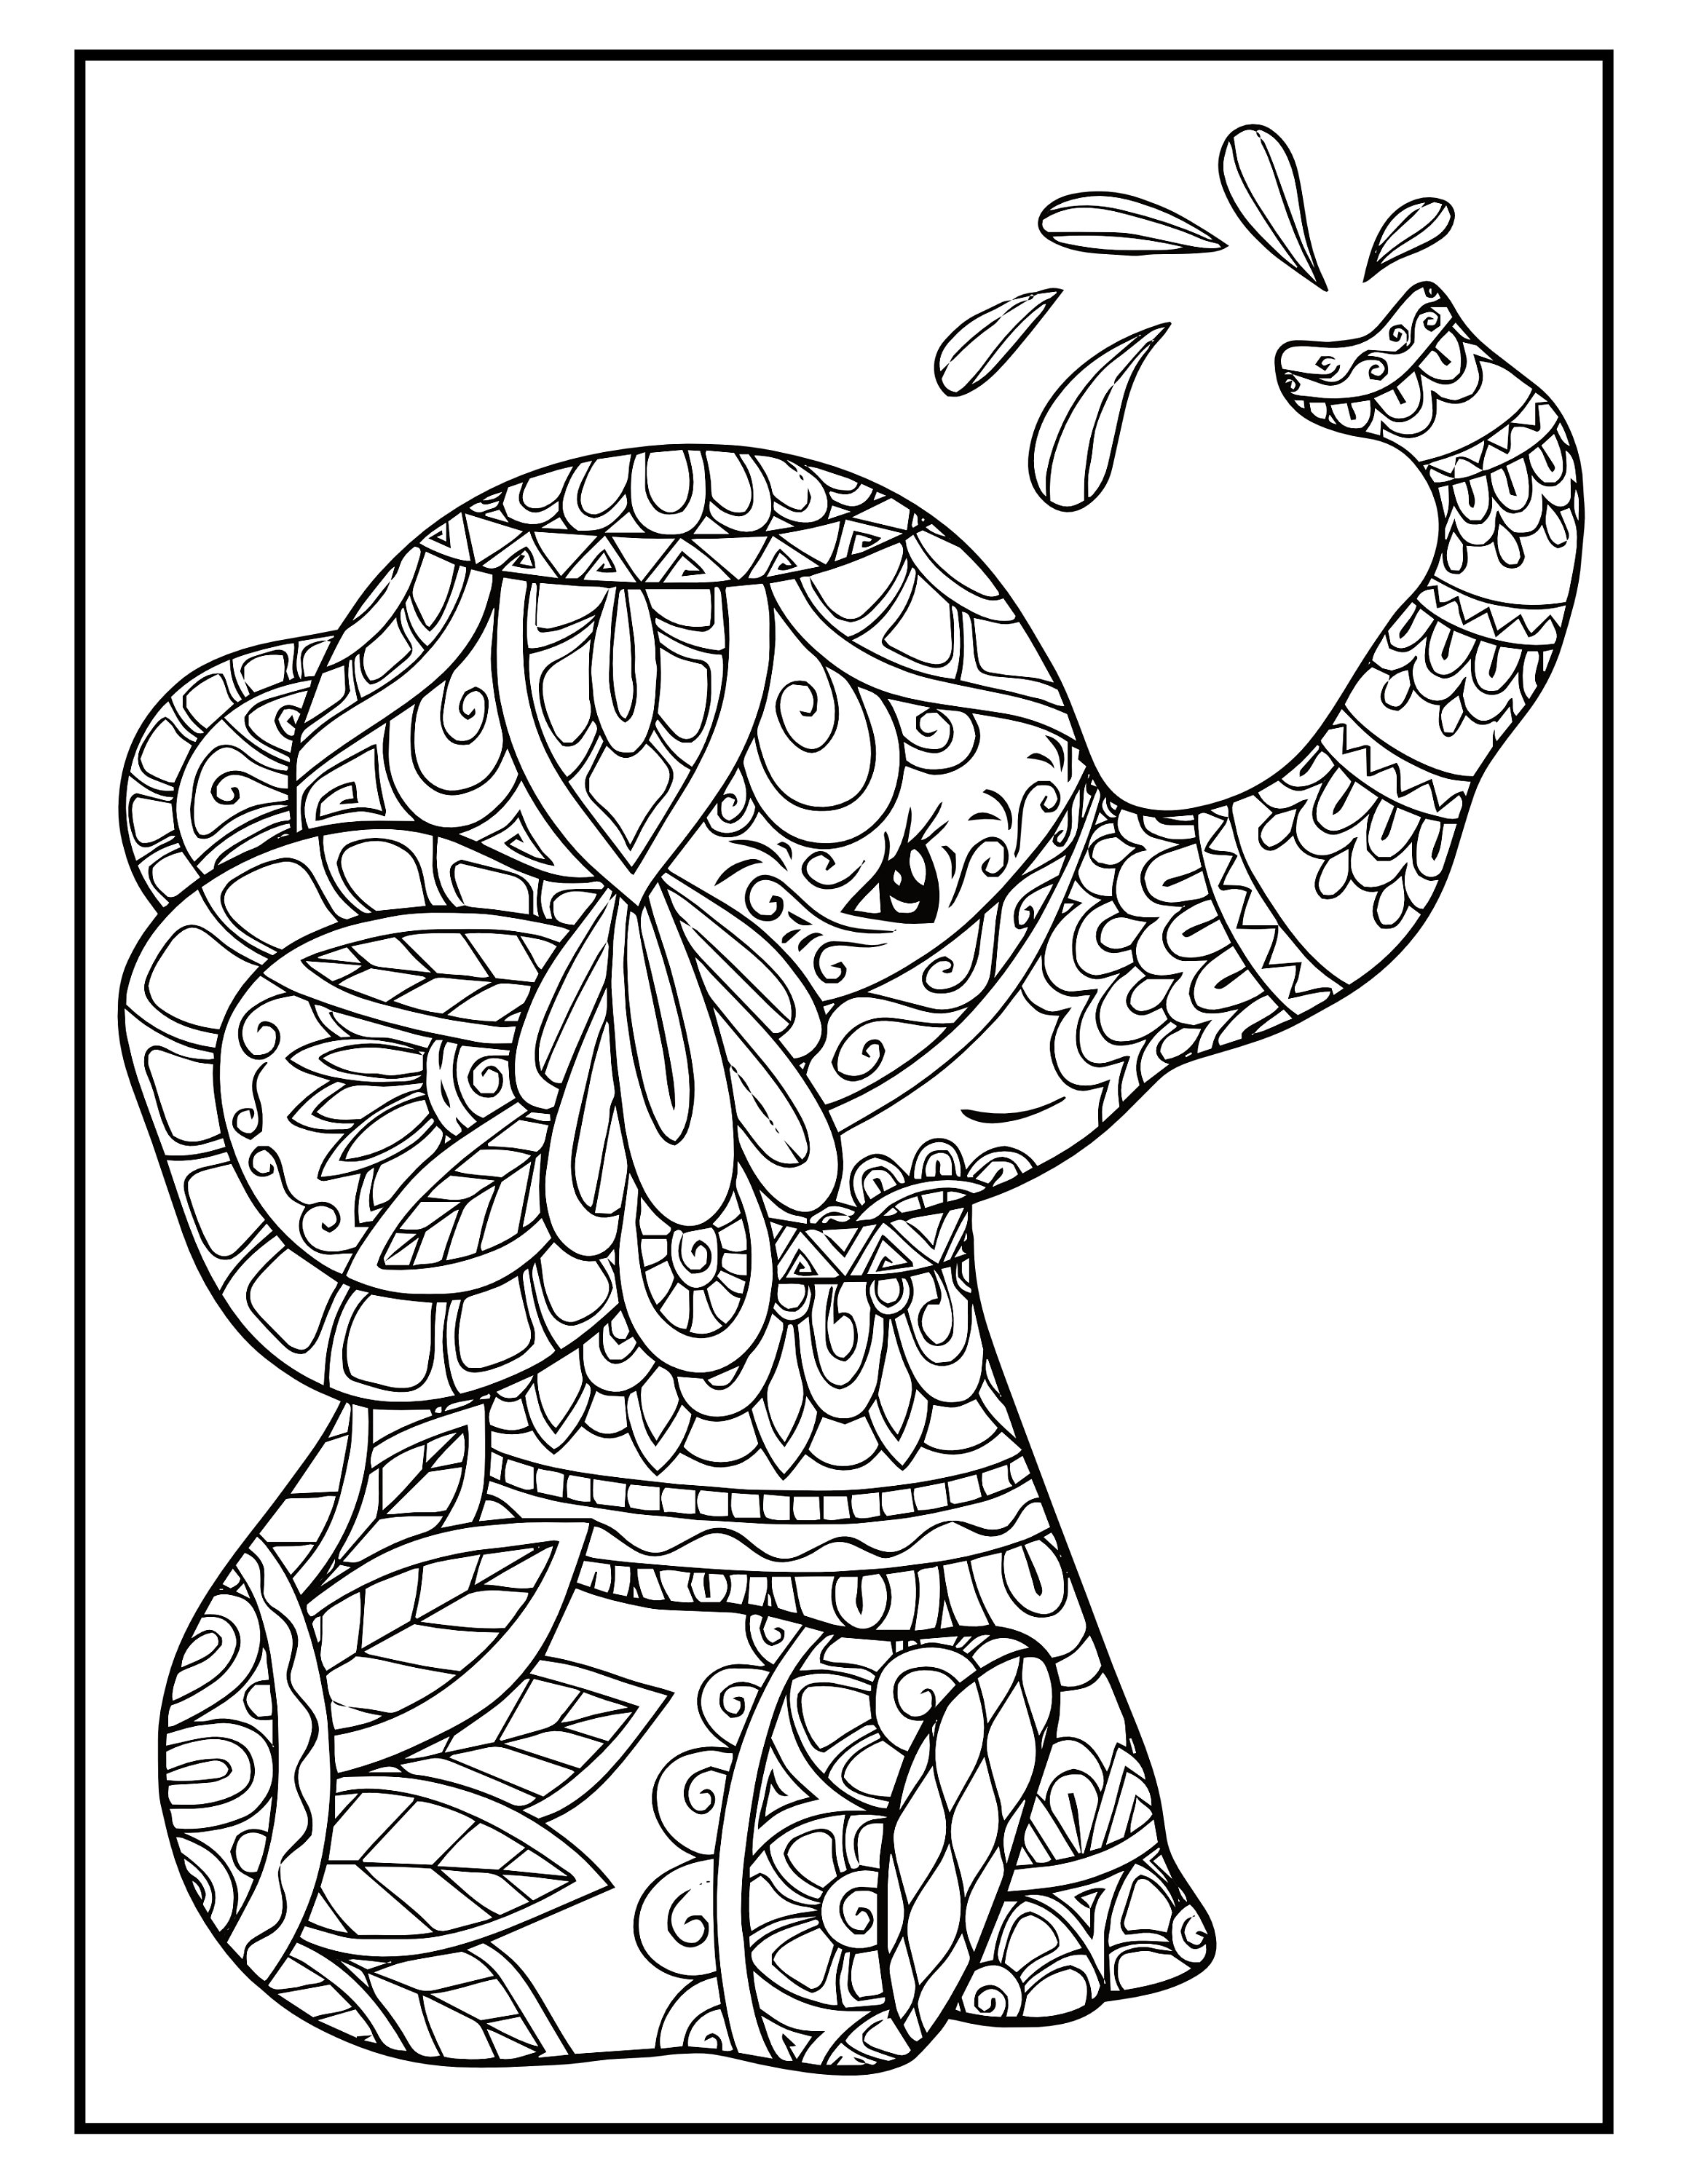 Elephant Mandala Coloring Pages - SheetalColor.com